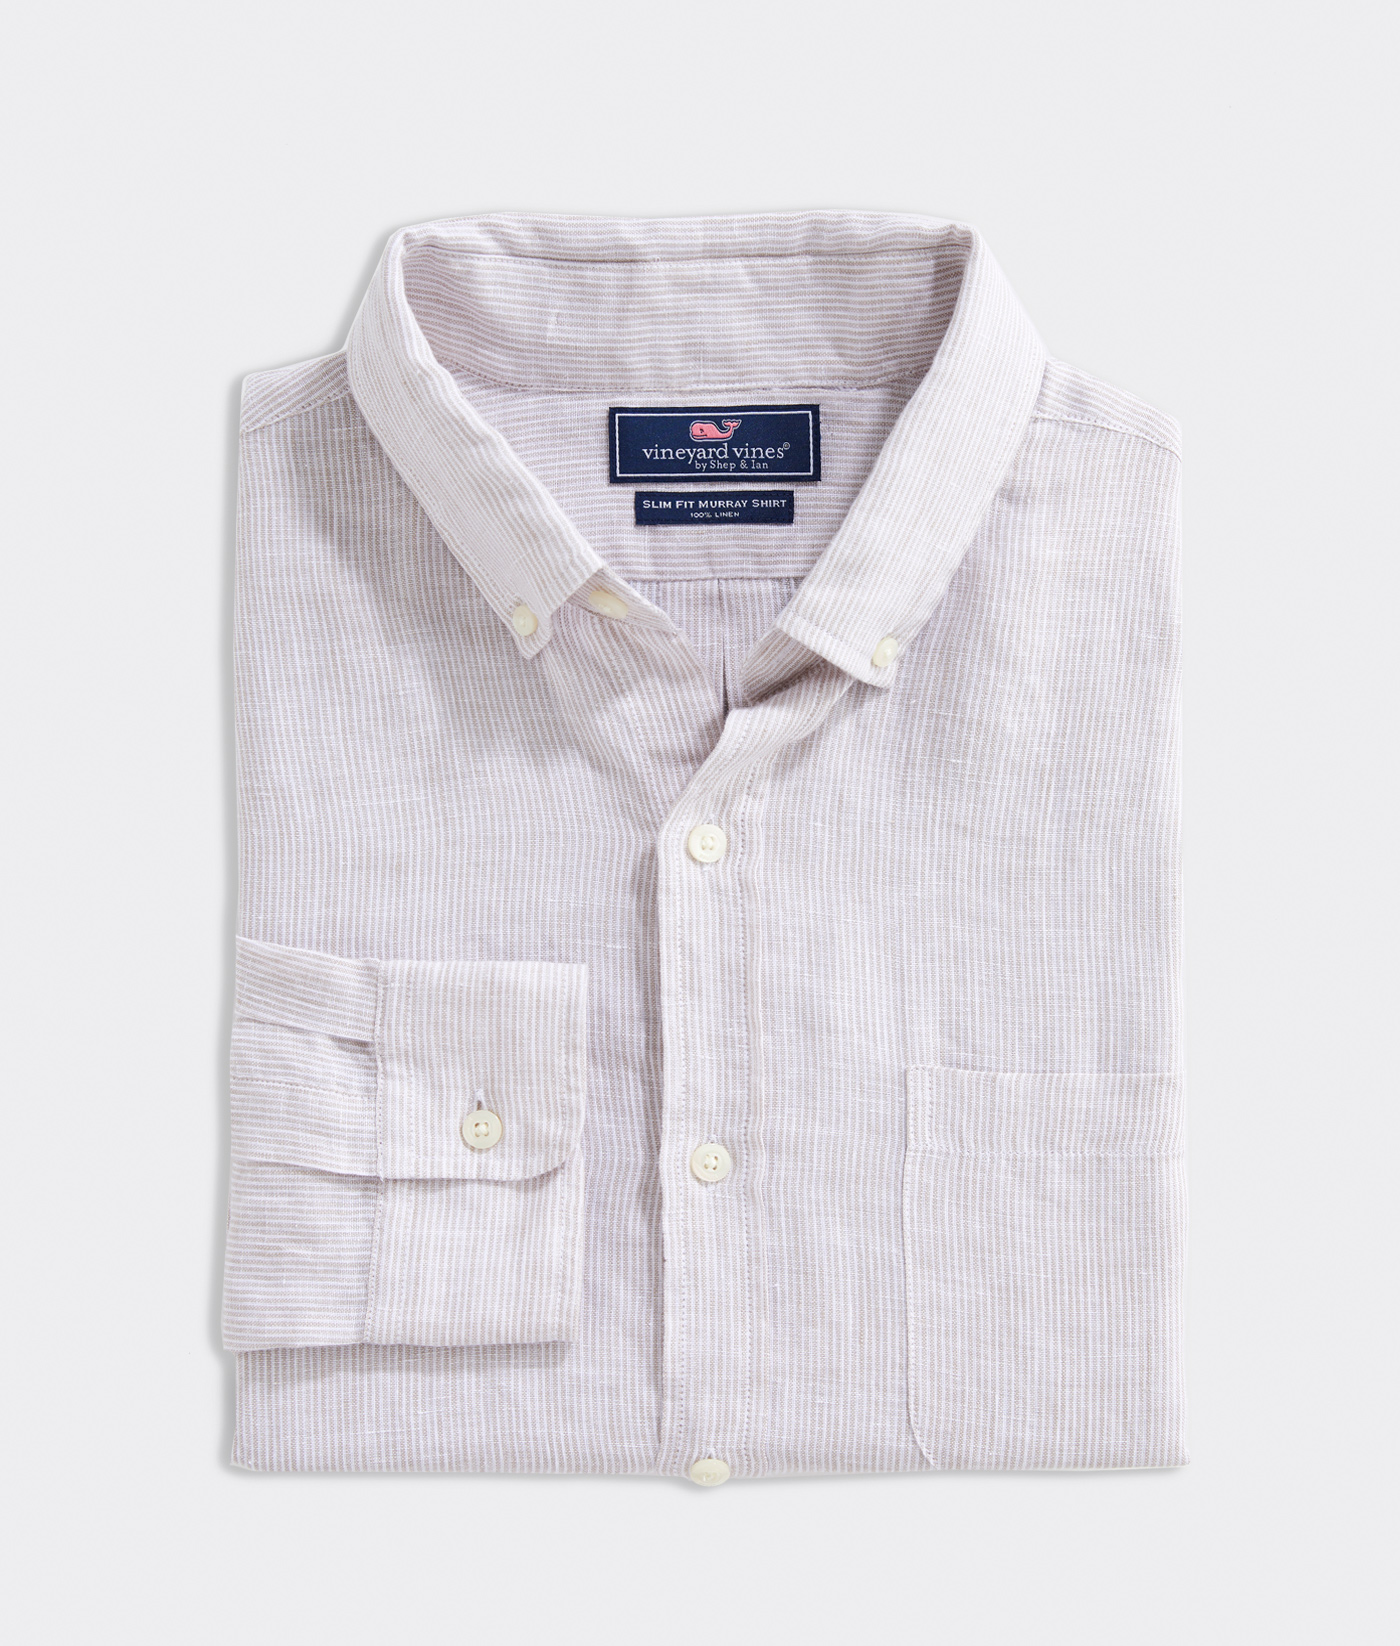 Shop Slim Fit Paradise Linen Murray Button-Down Shirt at vineyard vines